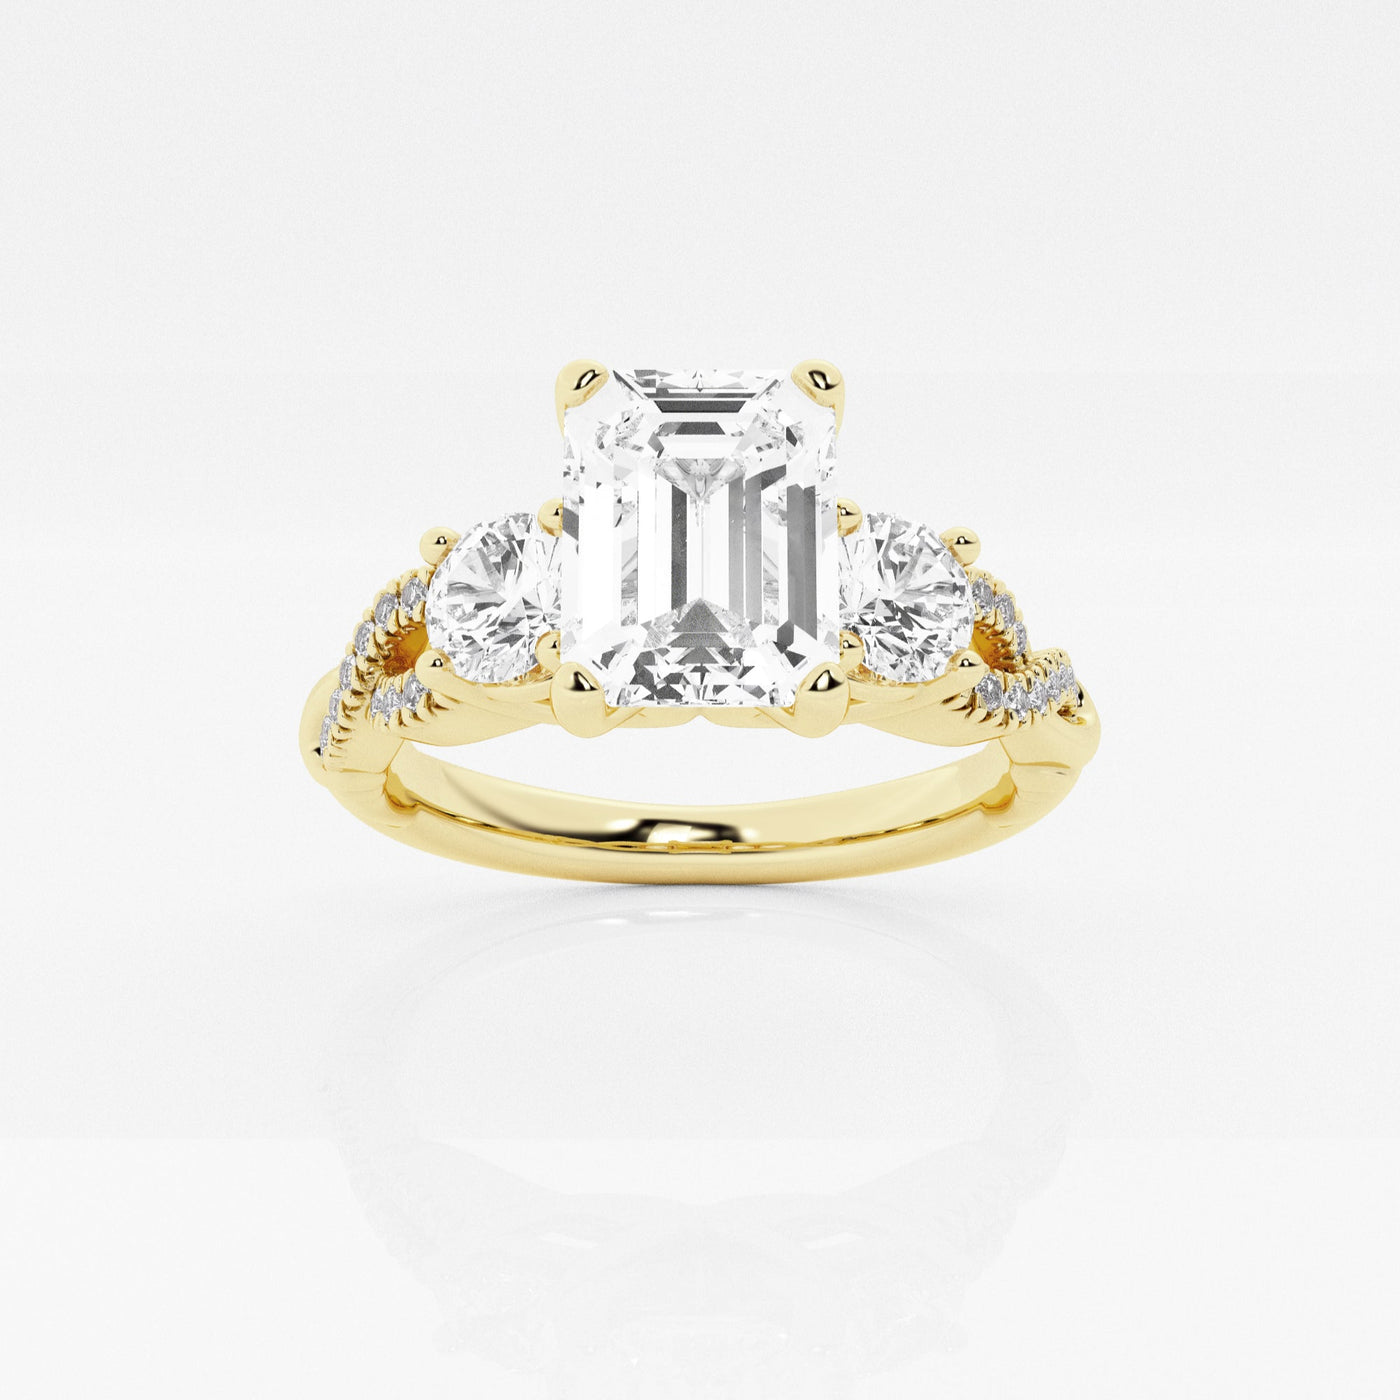 _main_image@SKU:LGR1007X2E100SOGY4~#carat_1.48#diamond-quality_fg,-vs2+#metal_18k-yellow-gold